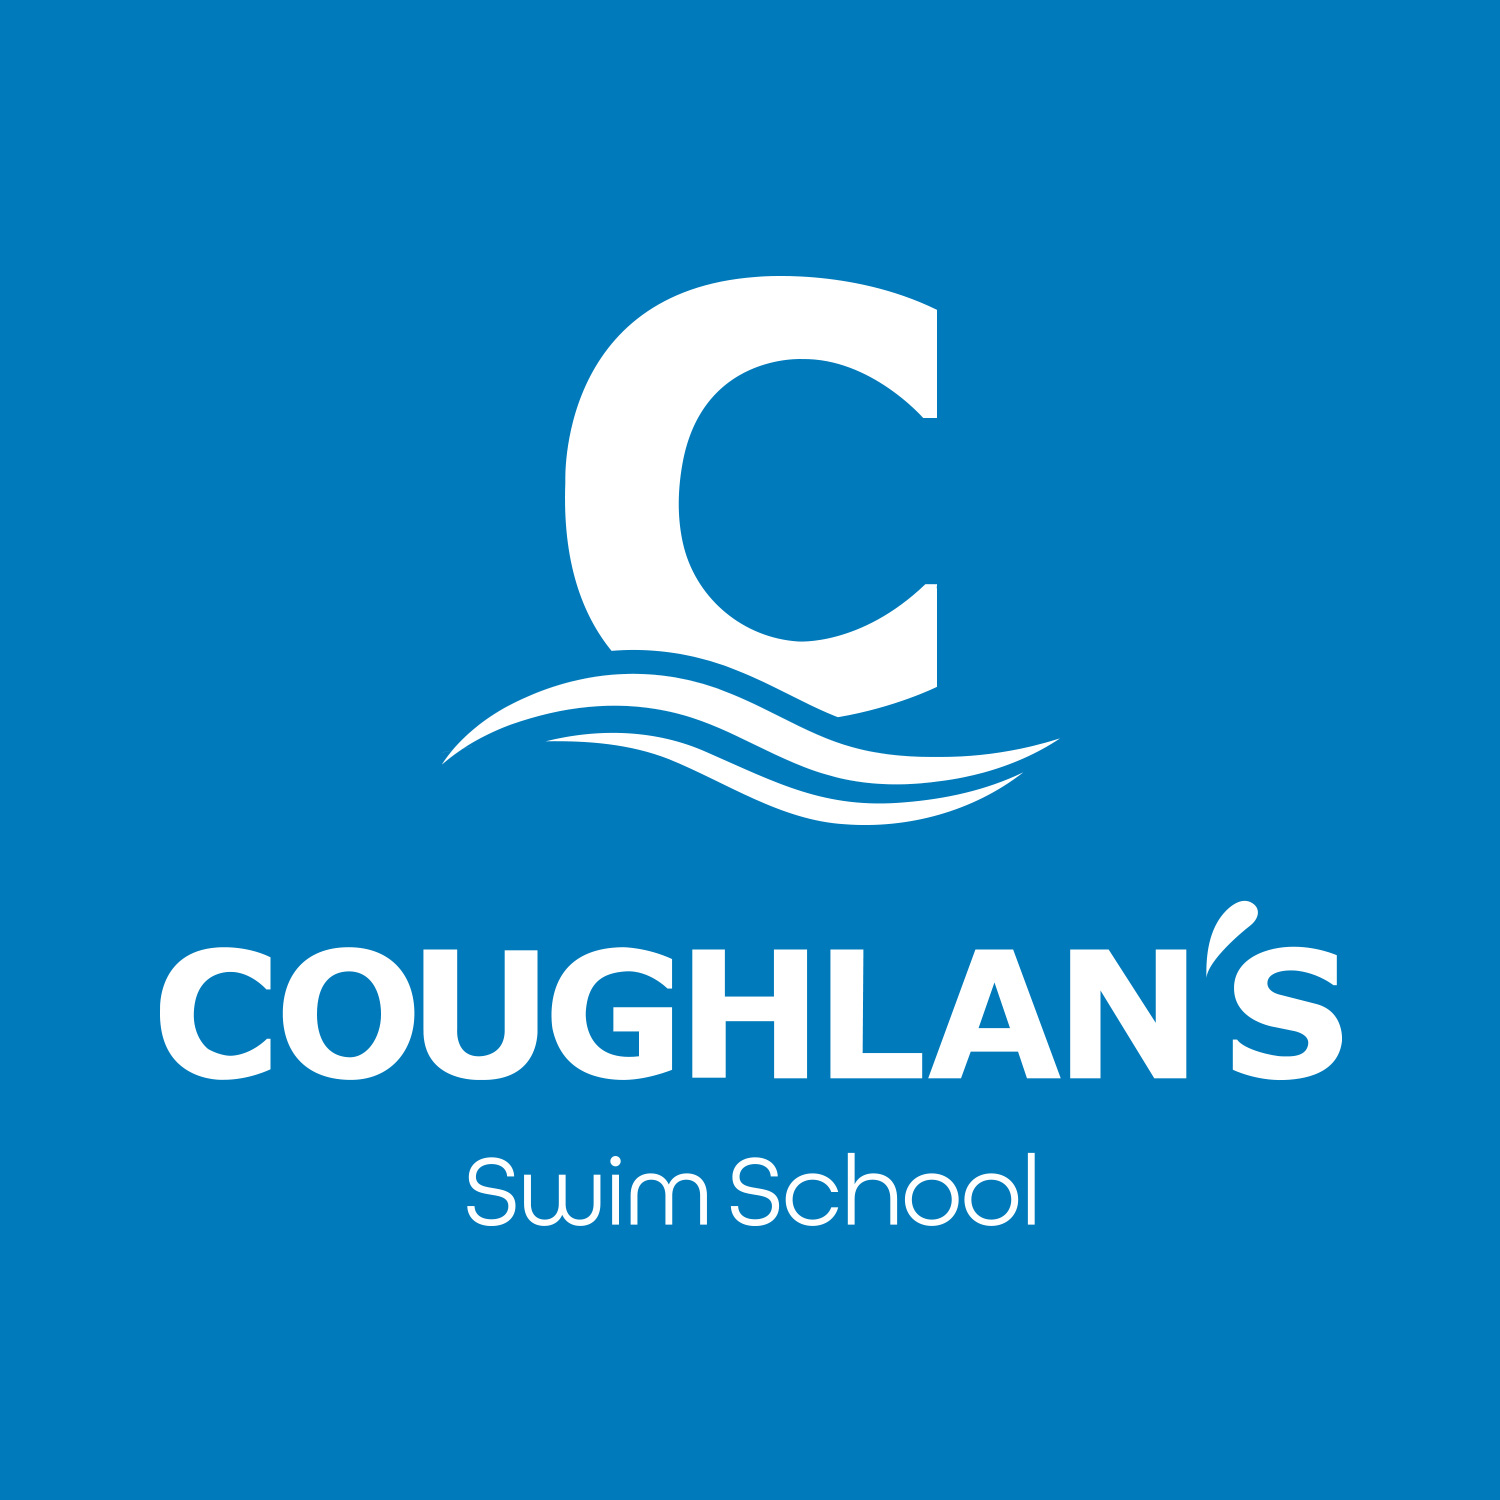 Coughlan's Swim School